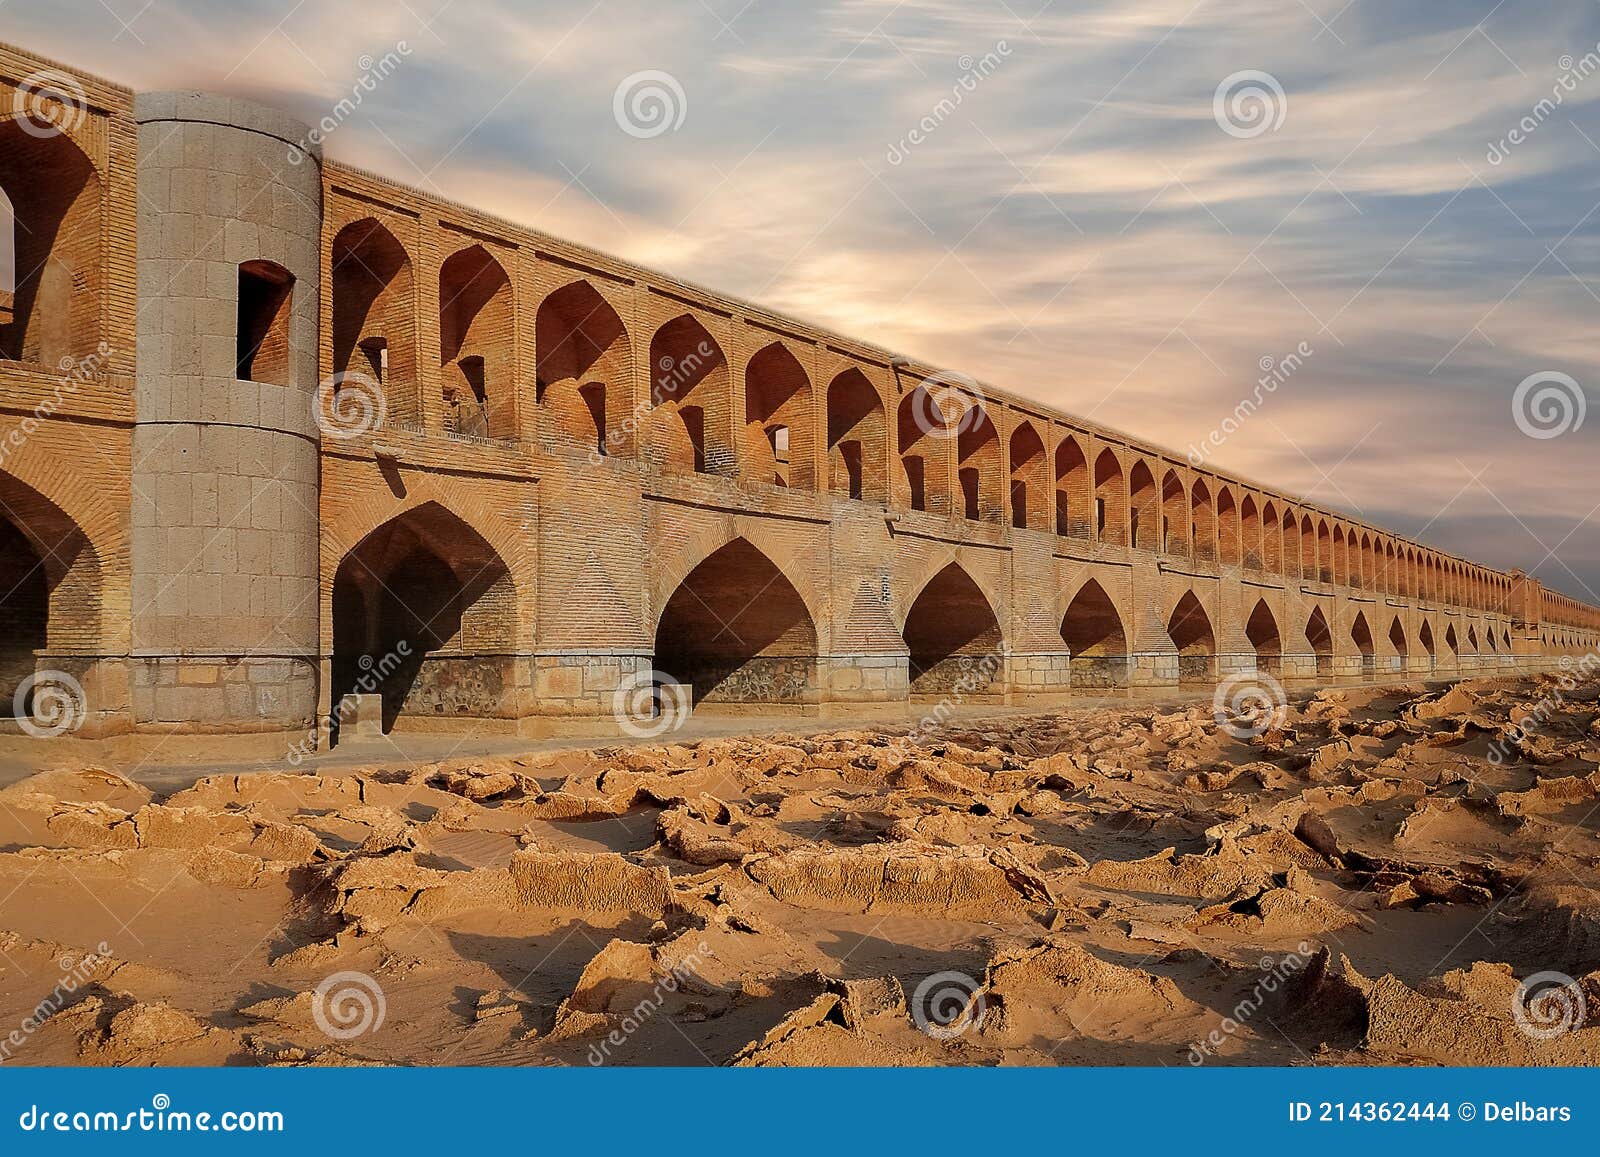 khaju pol-e khaju bridge in isfahan. iran. ancient persia.